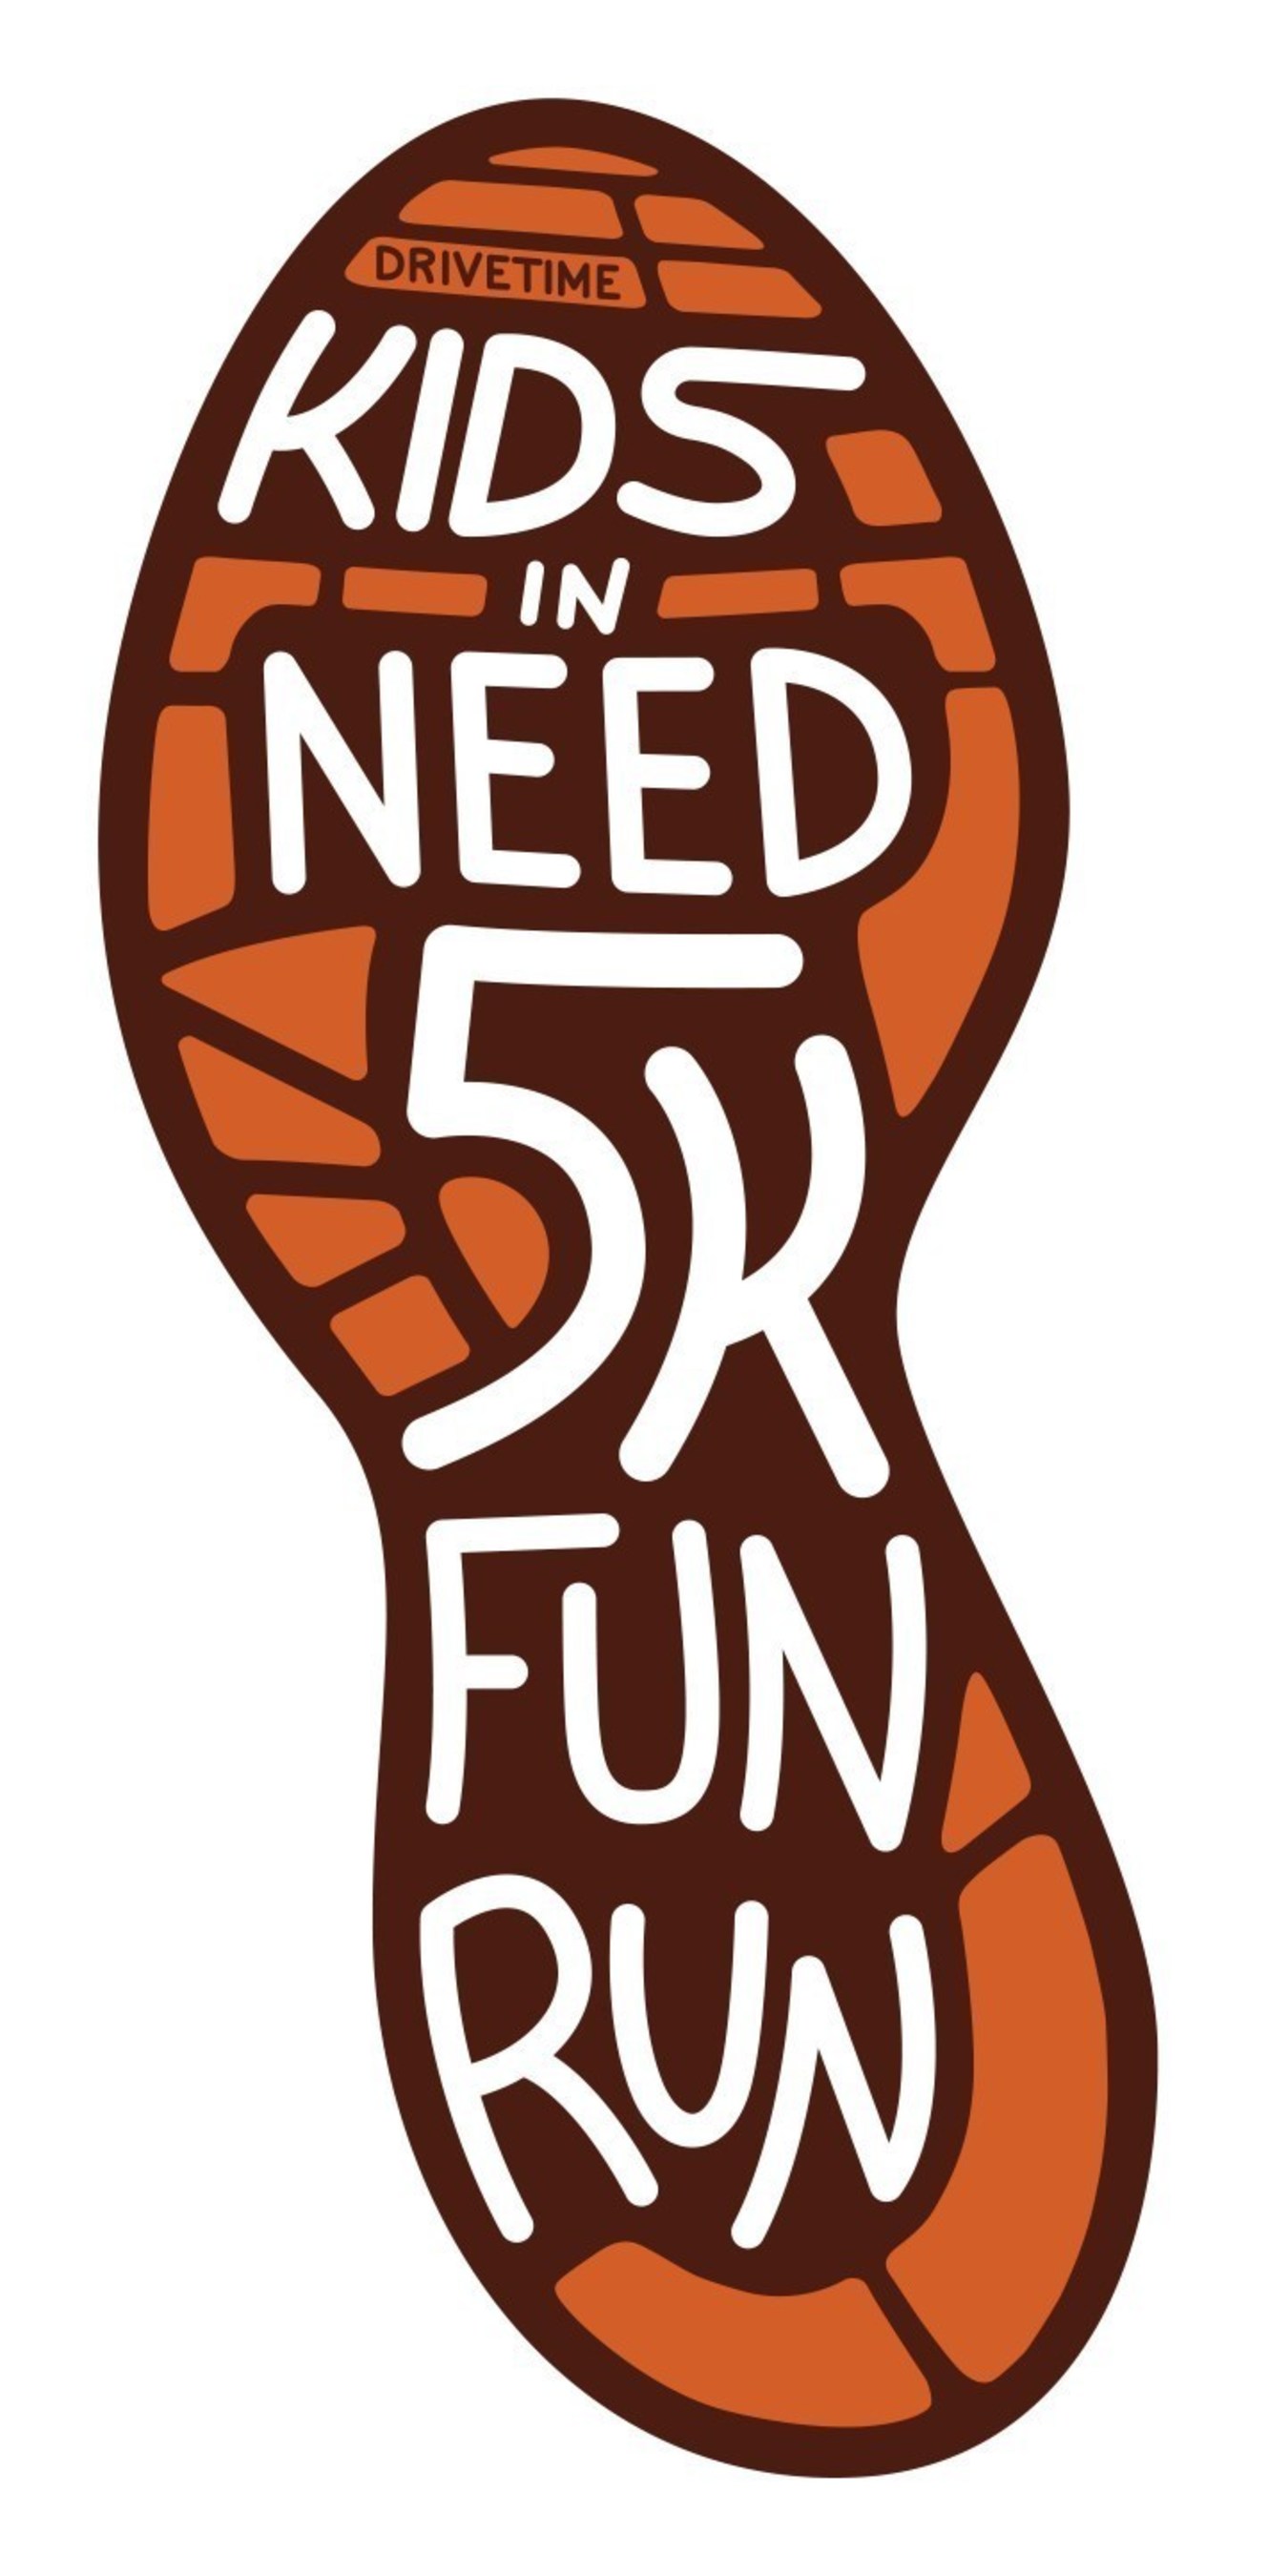 The DriveTime Kids in Need 5K Fun Run kicks off on October 25, 2015.